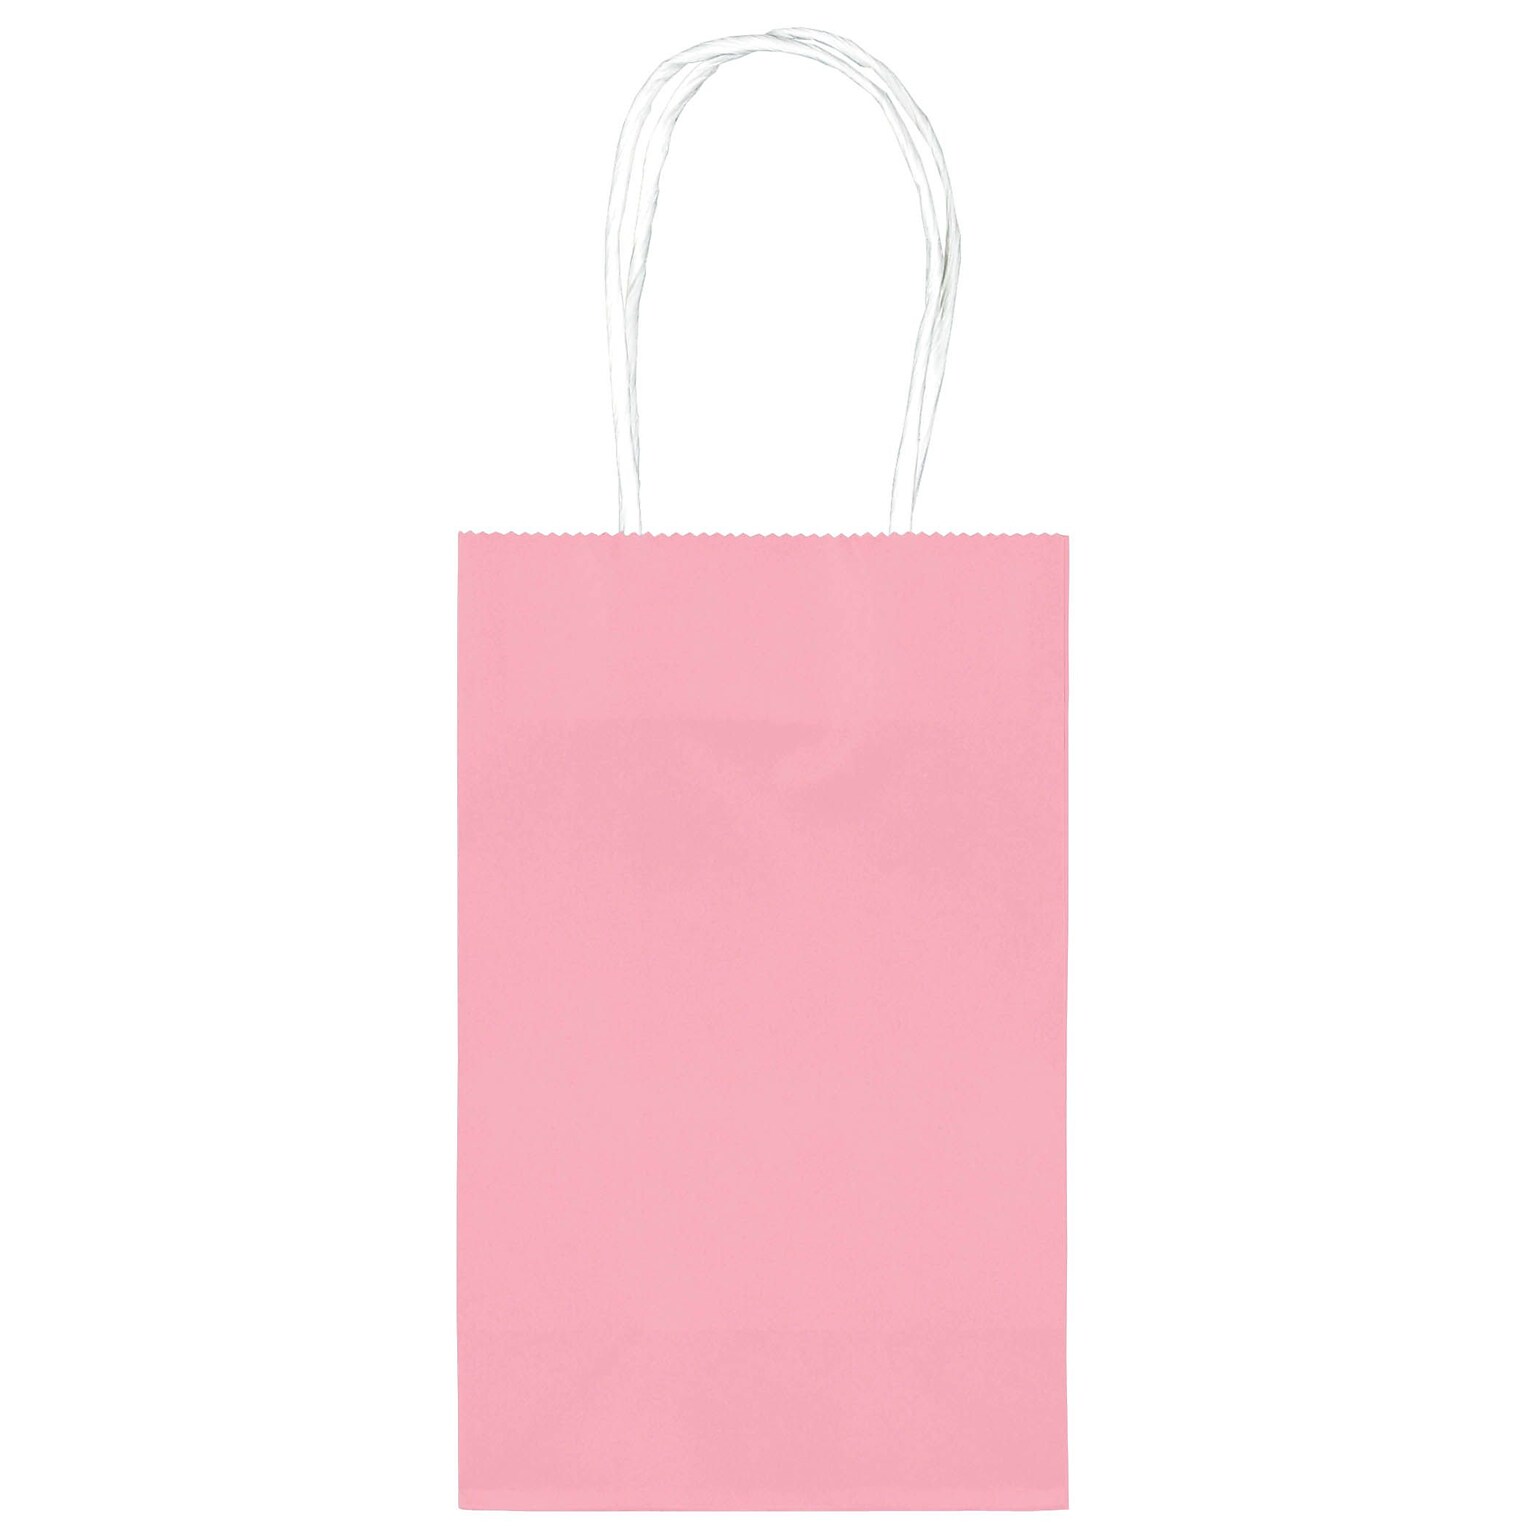 Amscan Cub Bags Value Pack; 4/Pack, Pink (162500.109)